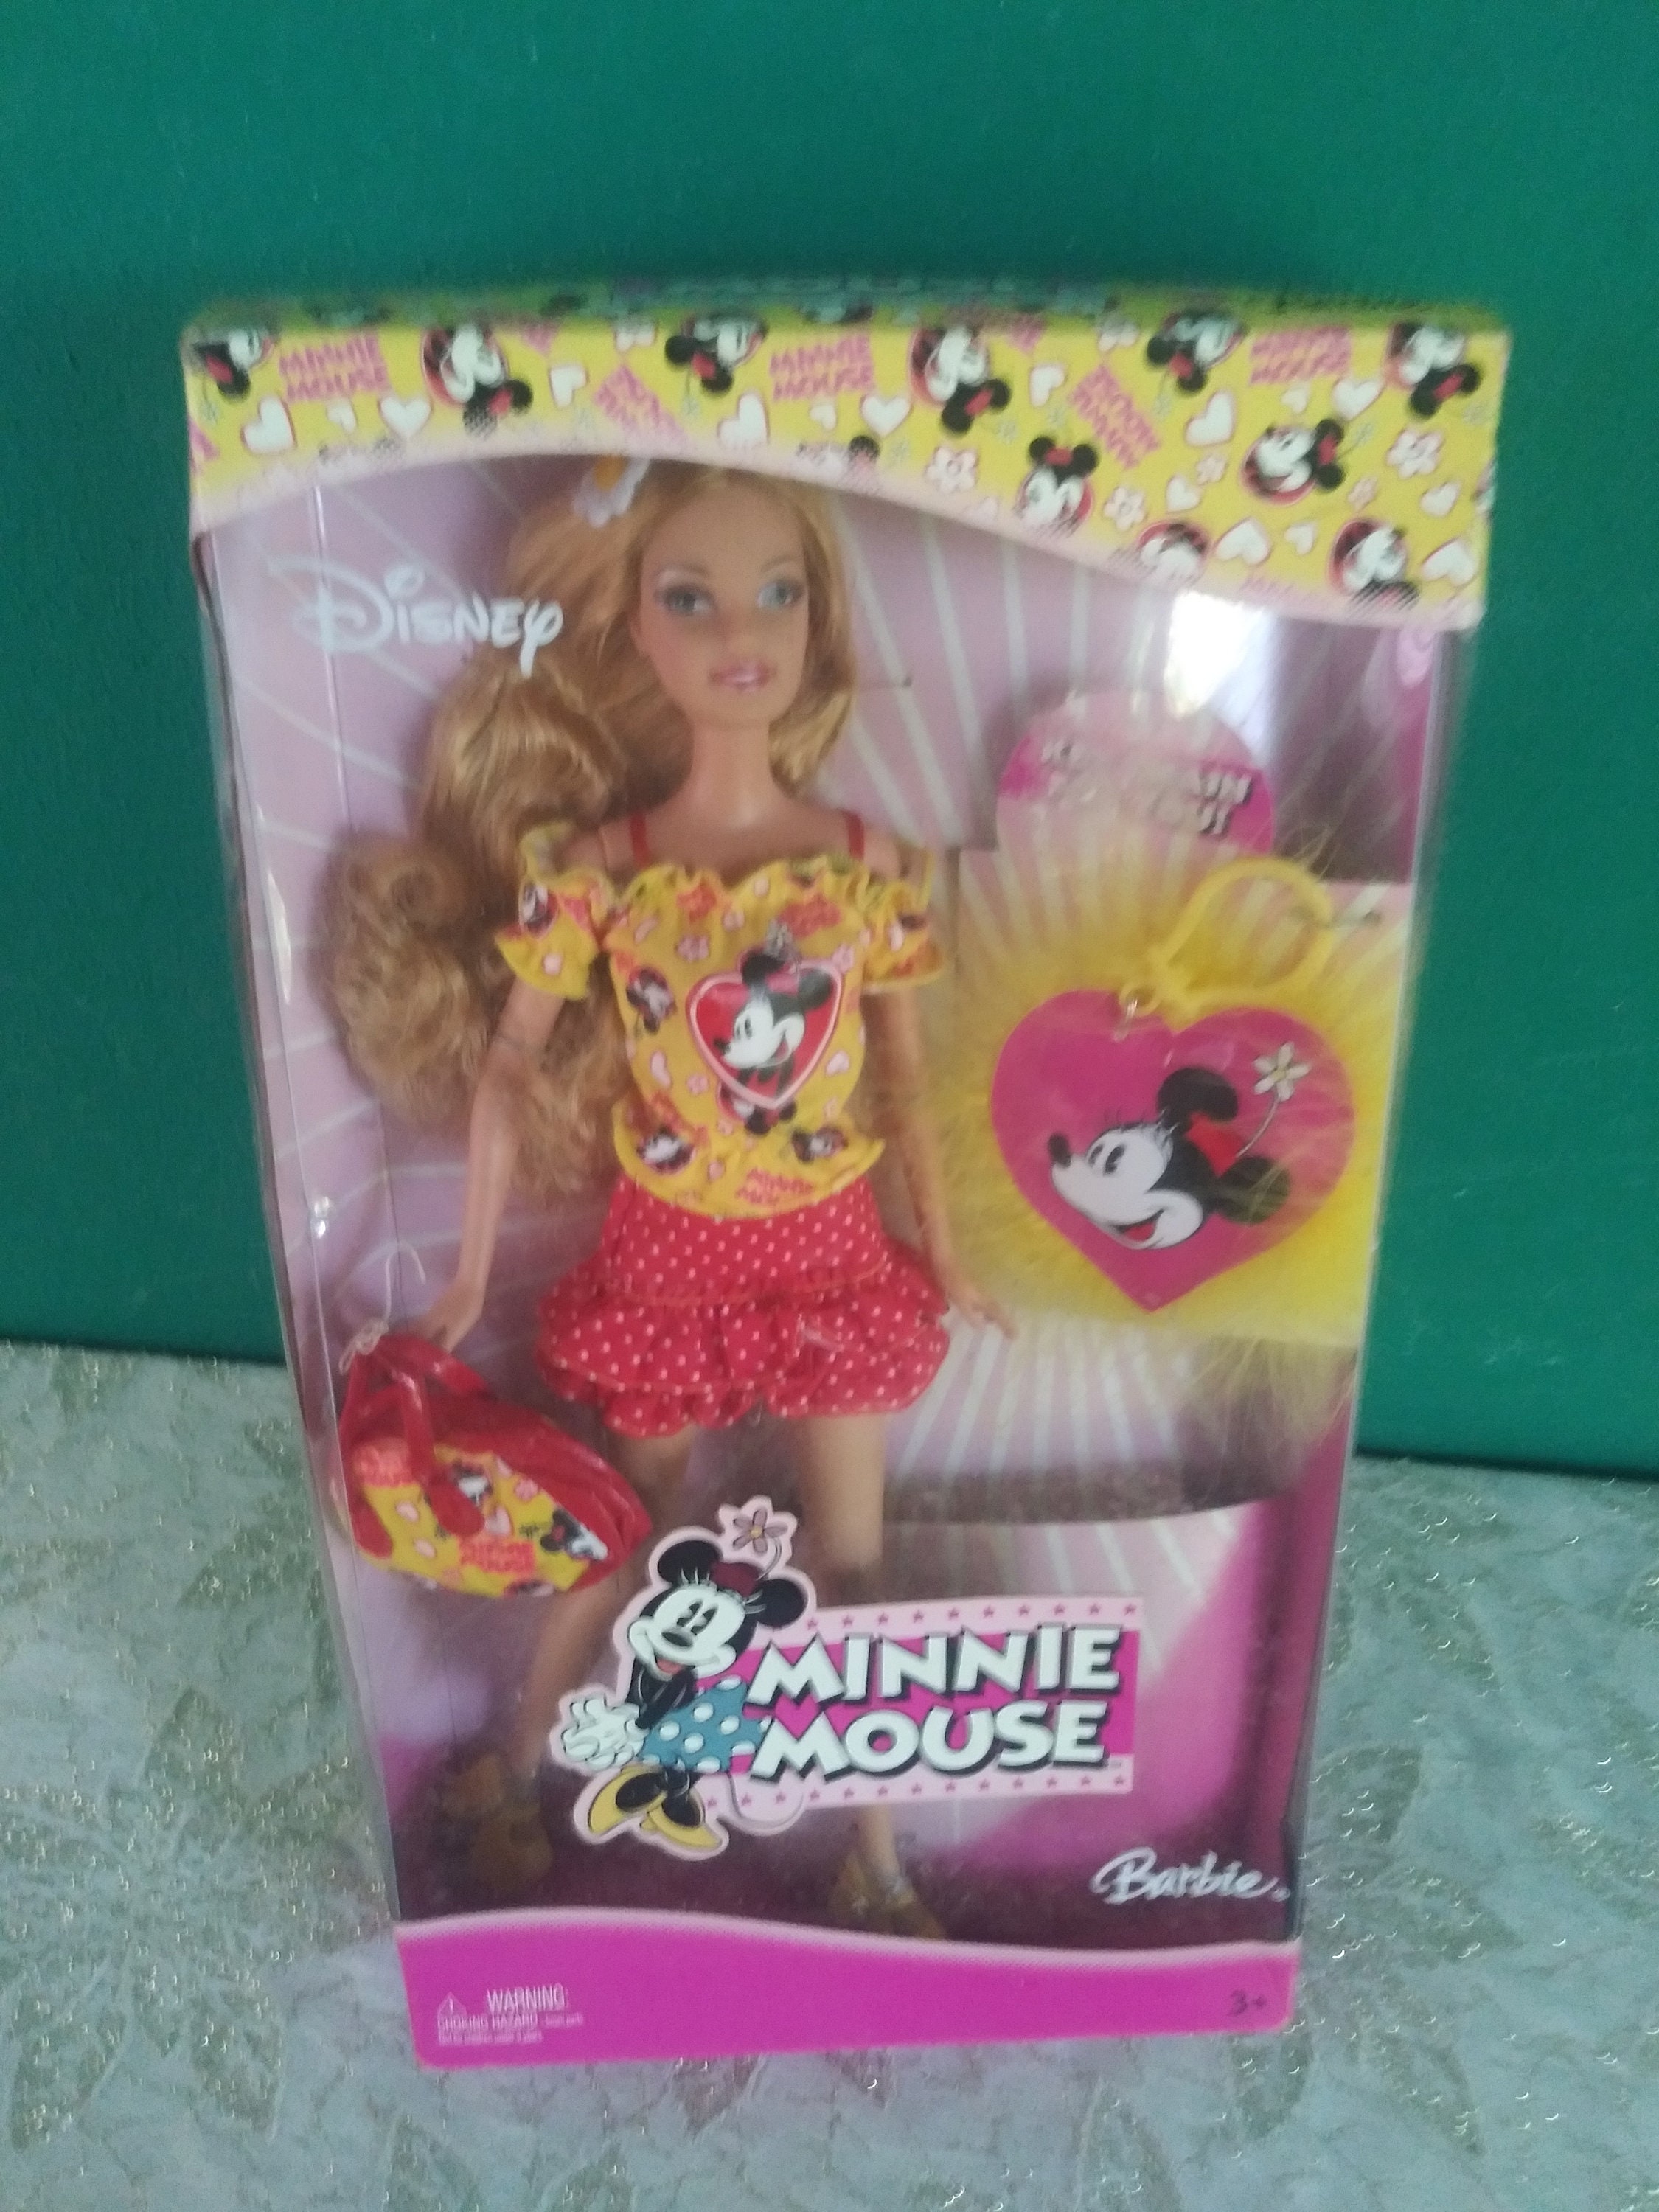 Per Omzet ramp Mattel Disney Minnie Mouse Barbie Doll Vintage Minnie Mouse - Etsy